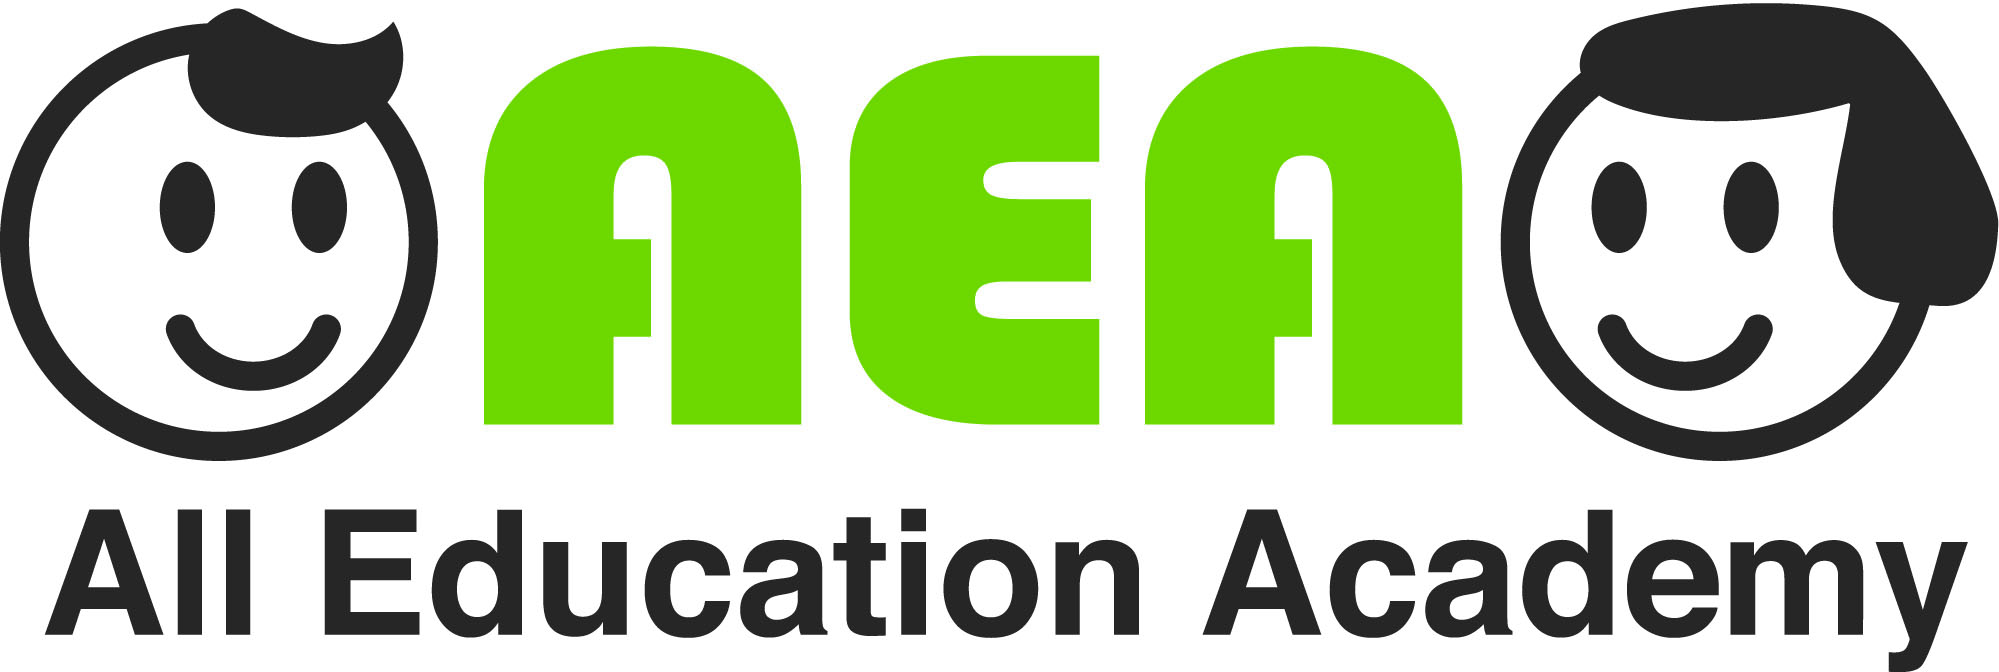 All Education Academy logo